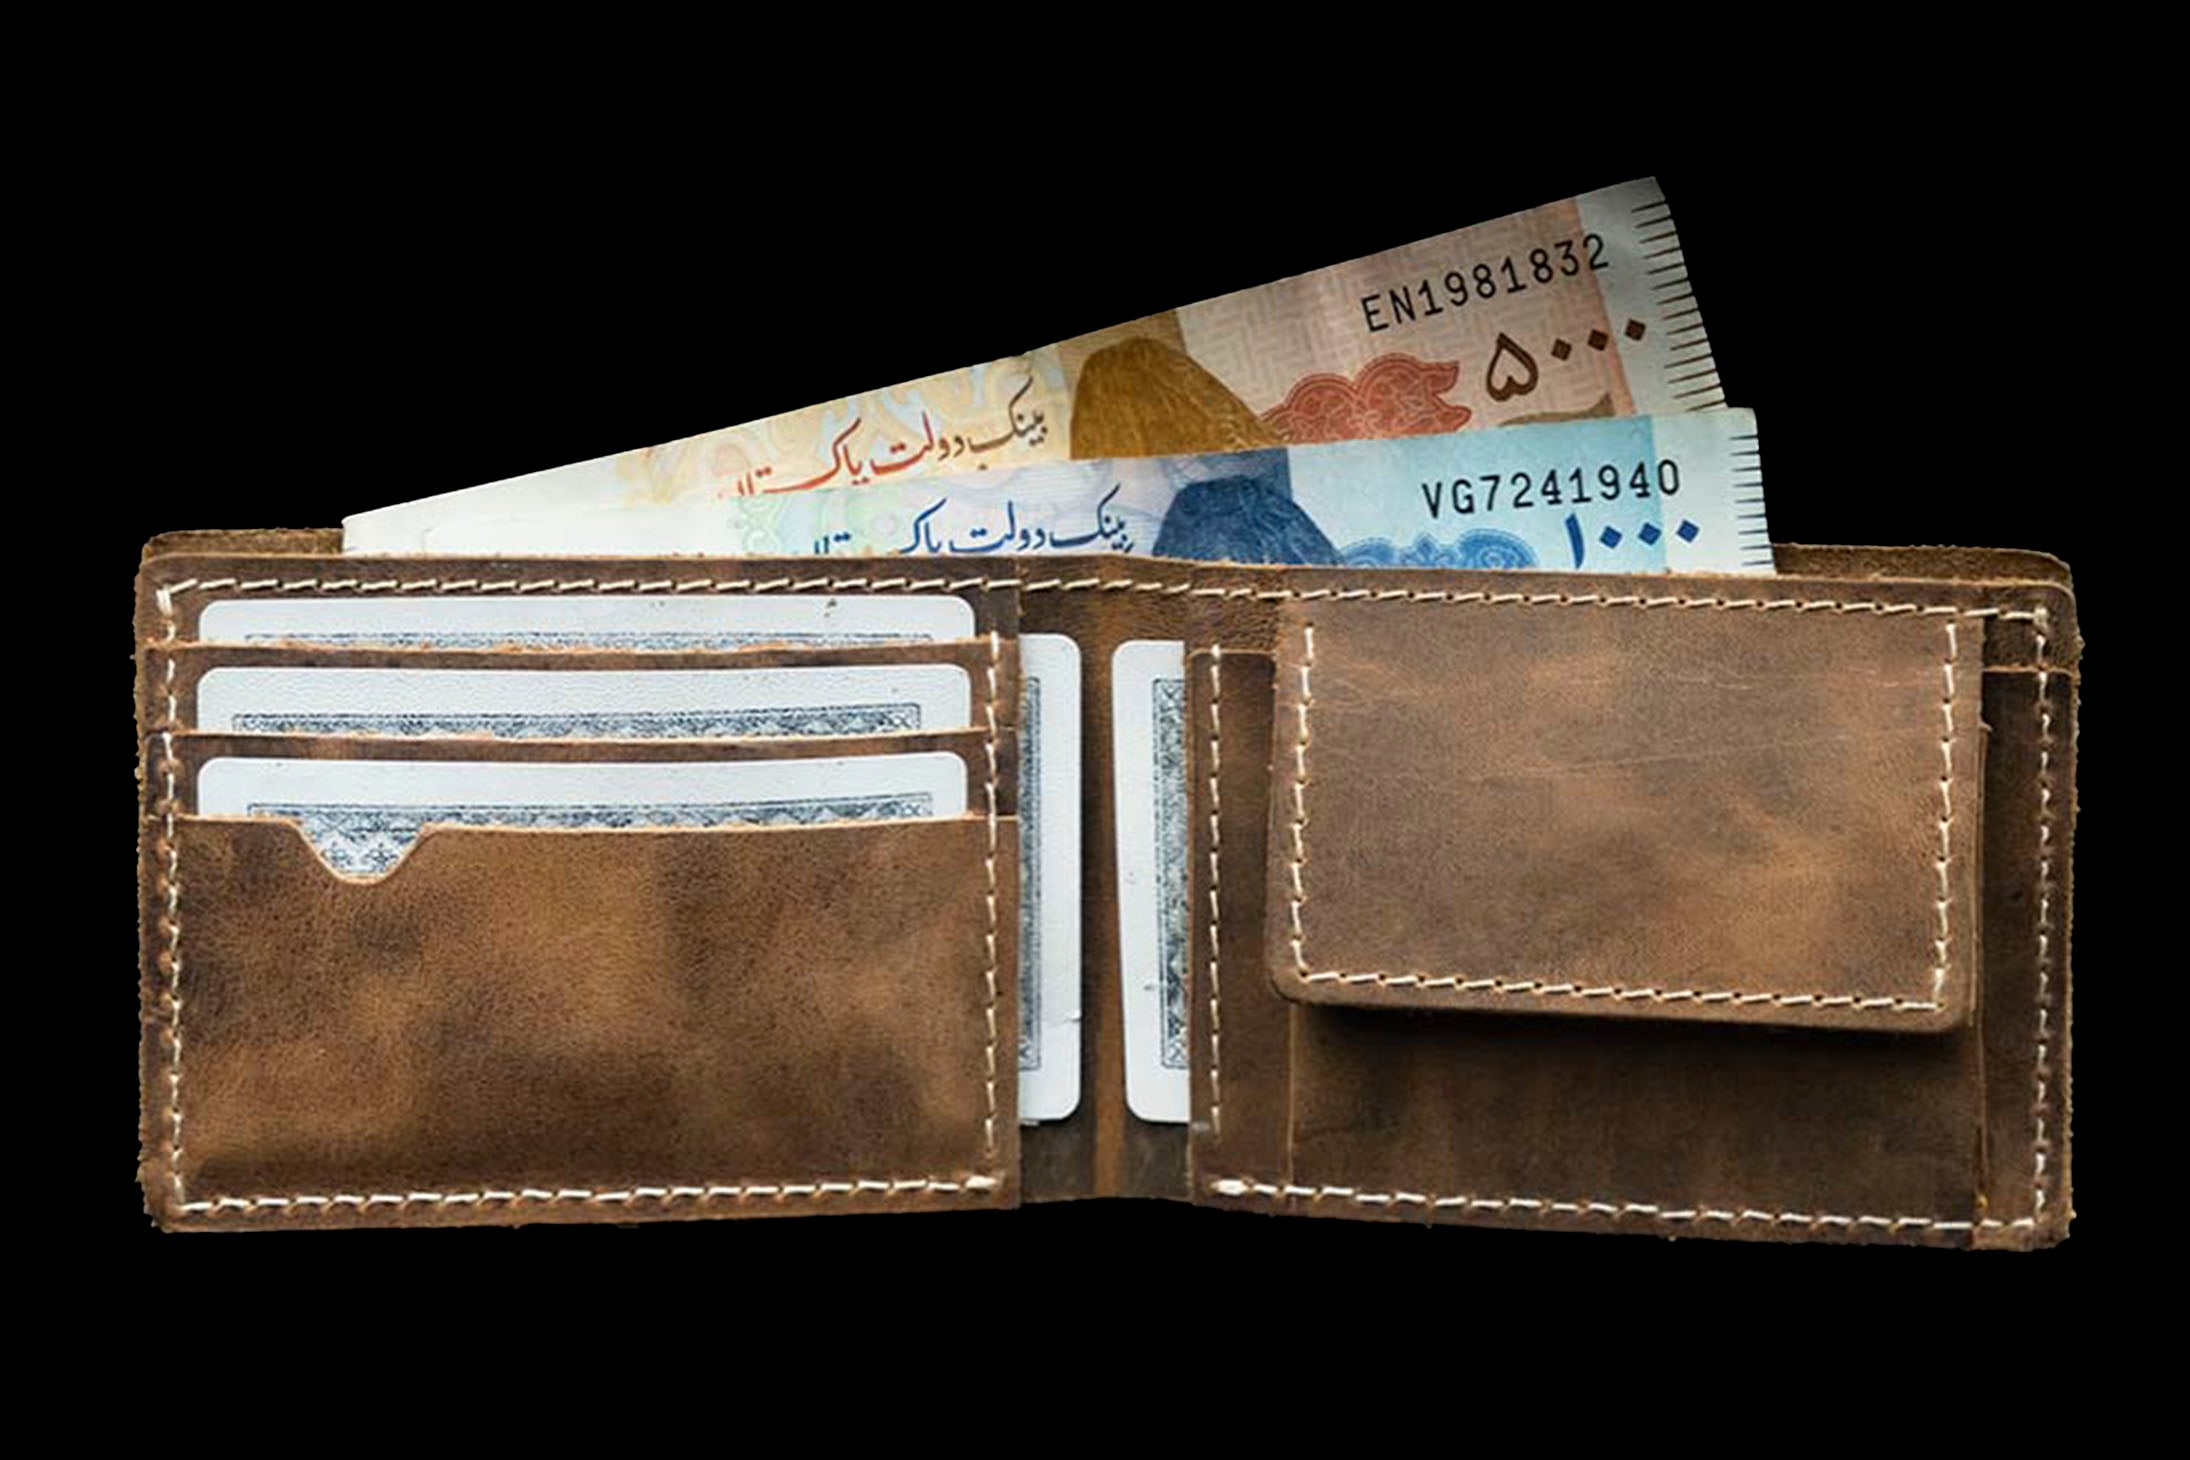 Bruno banani Men's Purse Wallet Purse Briefcase New | eBay